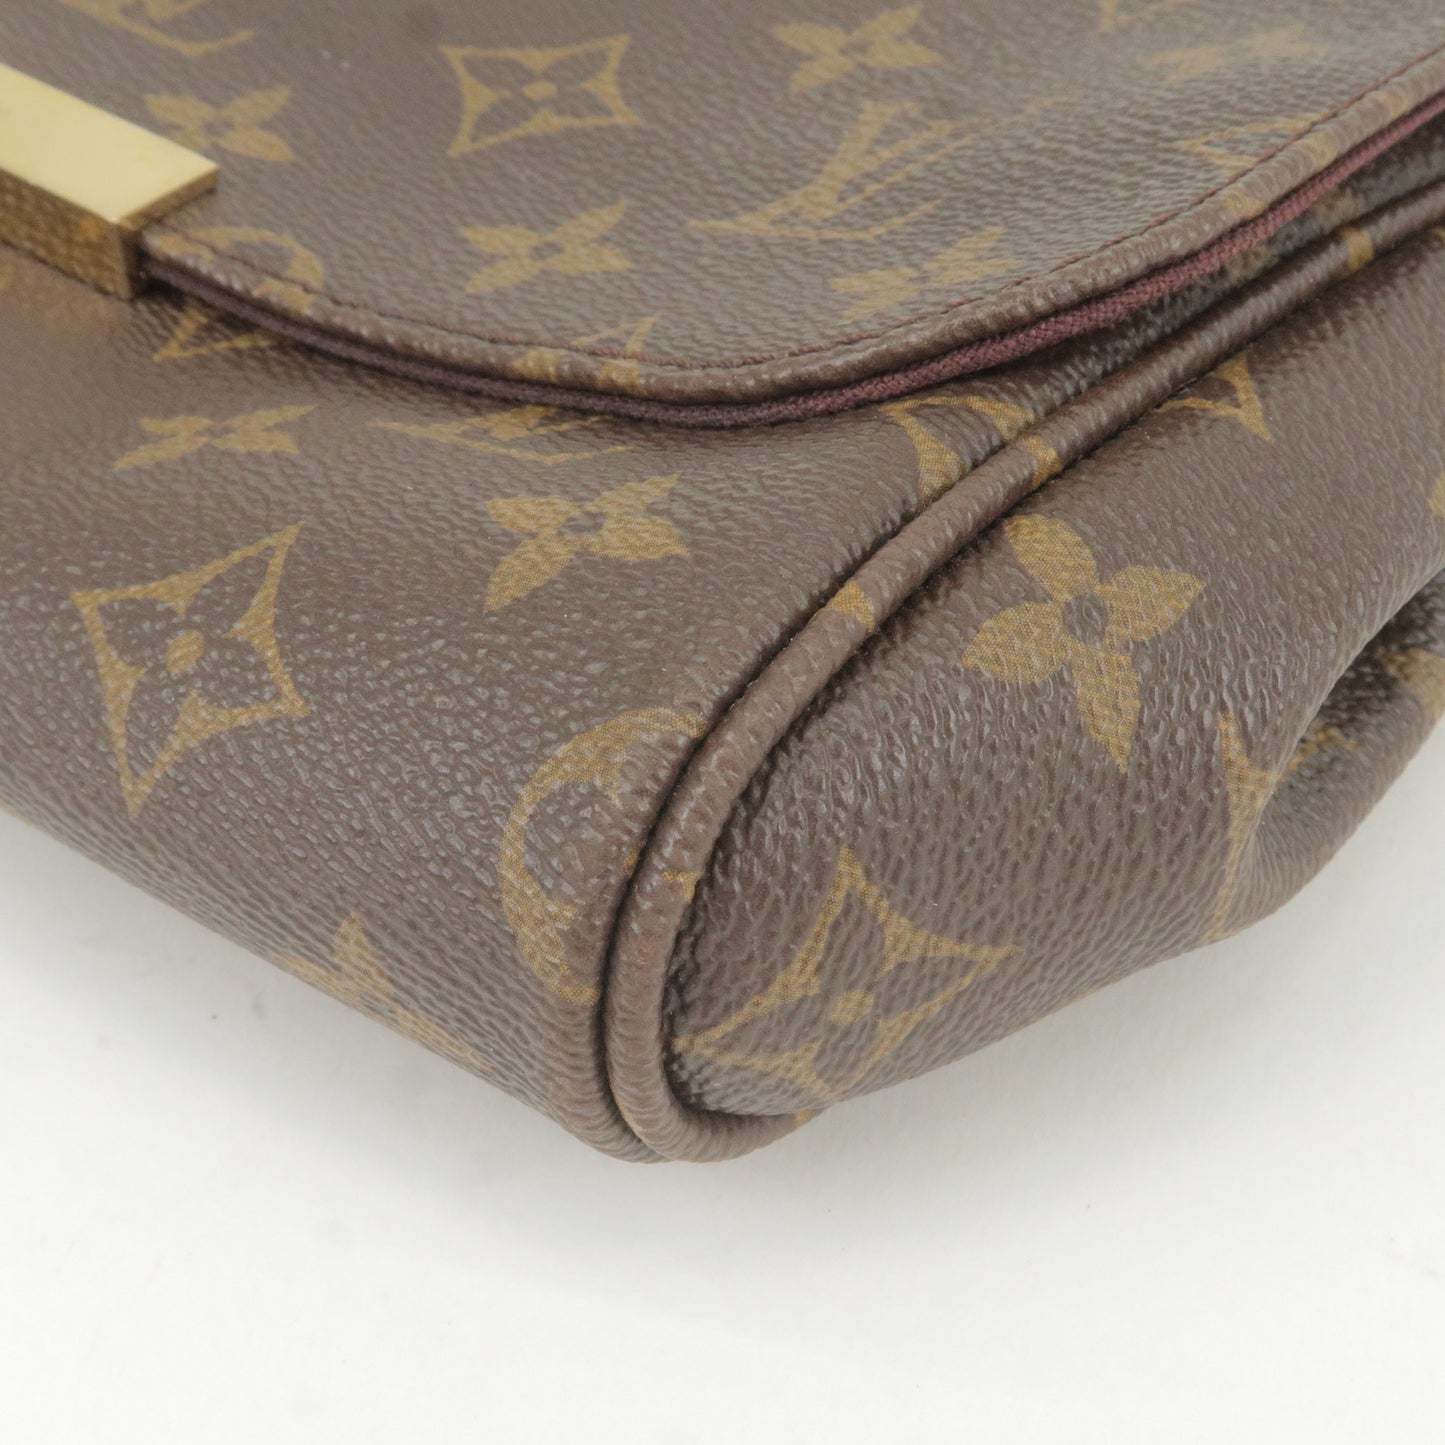 Louis Vuitton Monogram Favorite PM 2Way Shoulder Bag M40717